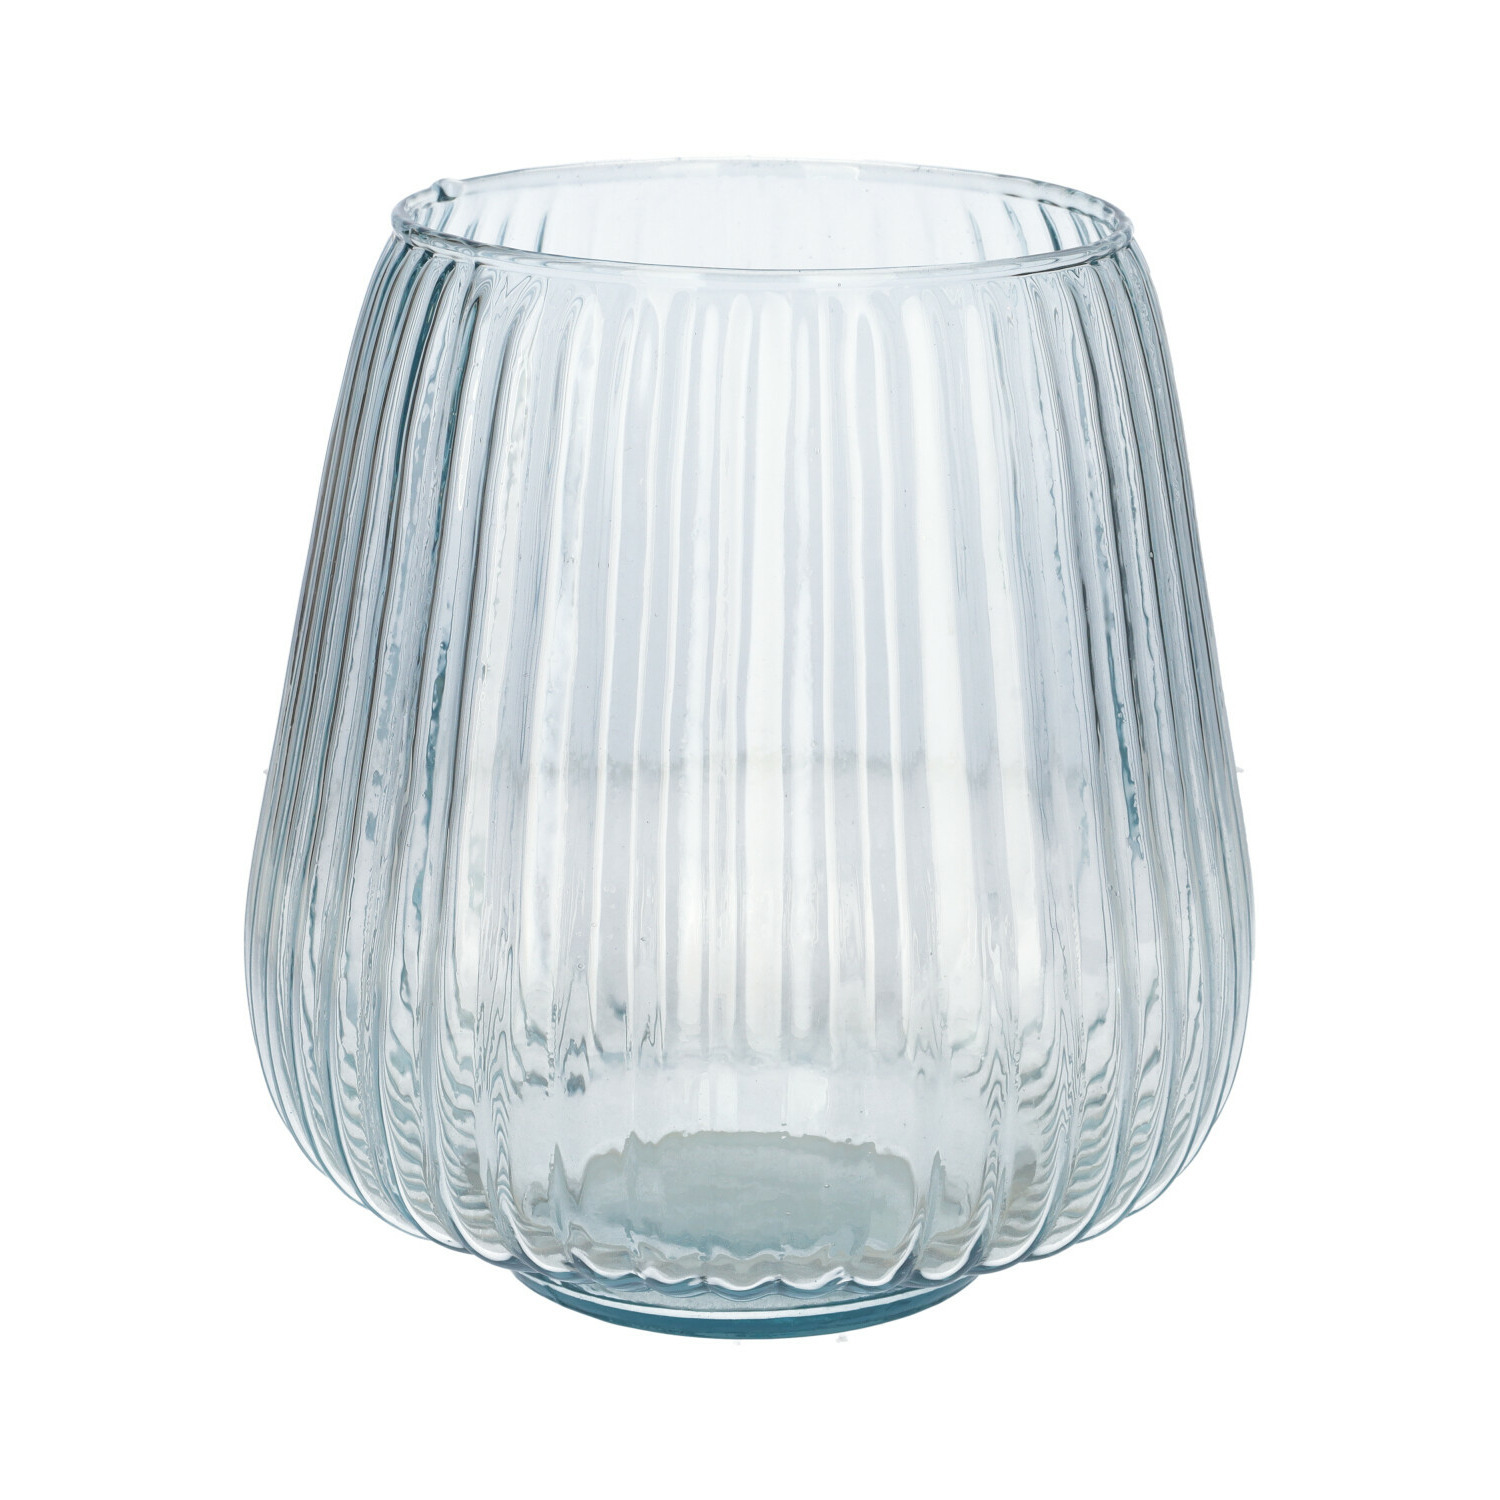 Merkloos Bloemenvaas Amar - helder transparant glas - D17,5 x H19 cm - decoratieve vaas - bloemen/takken -